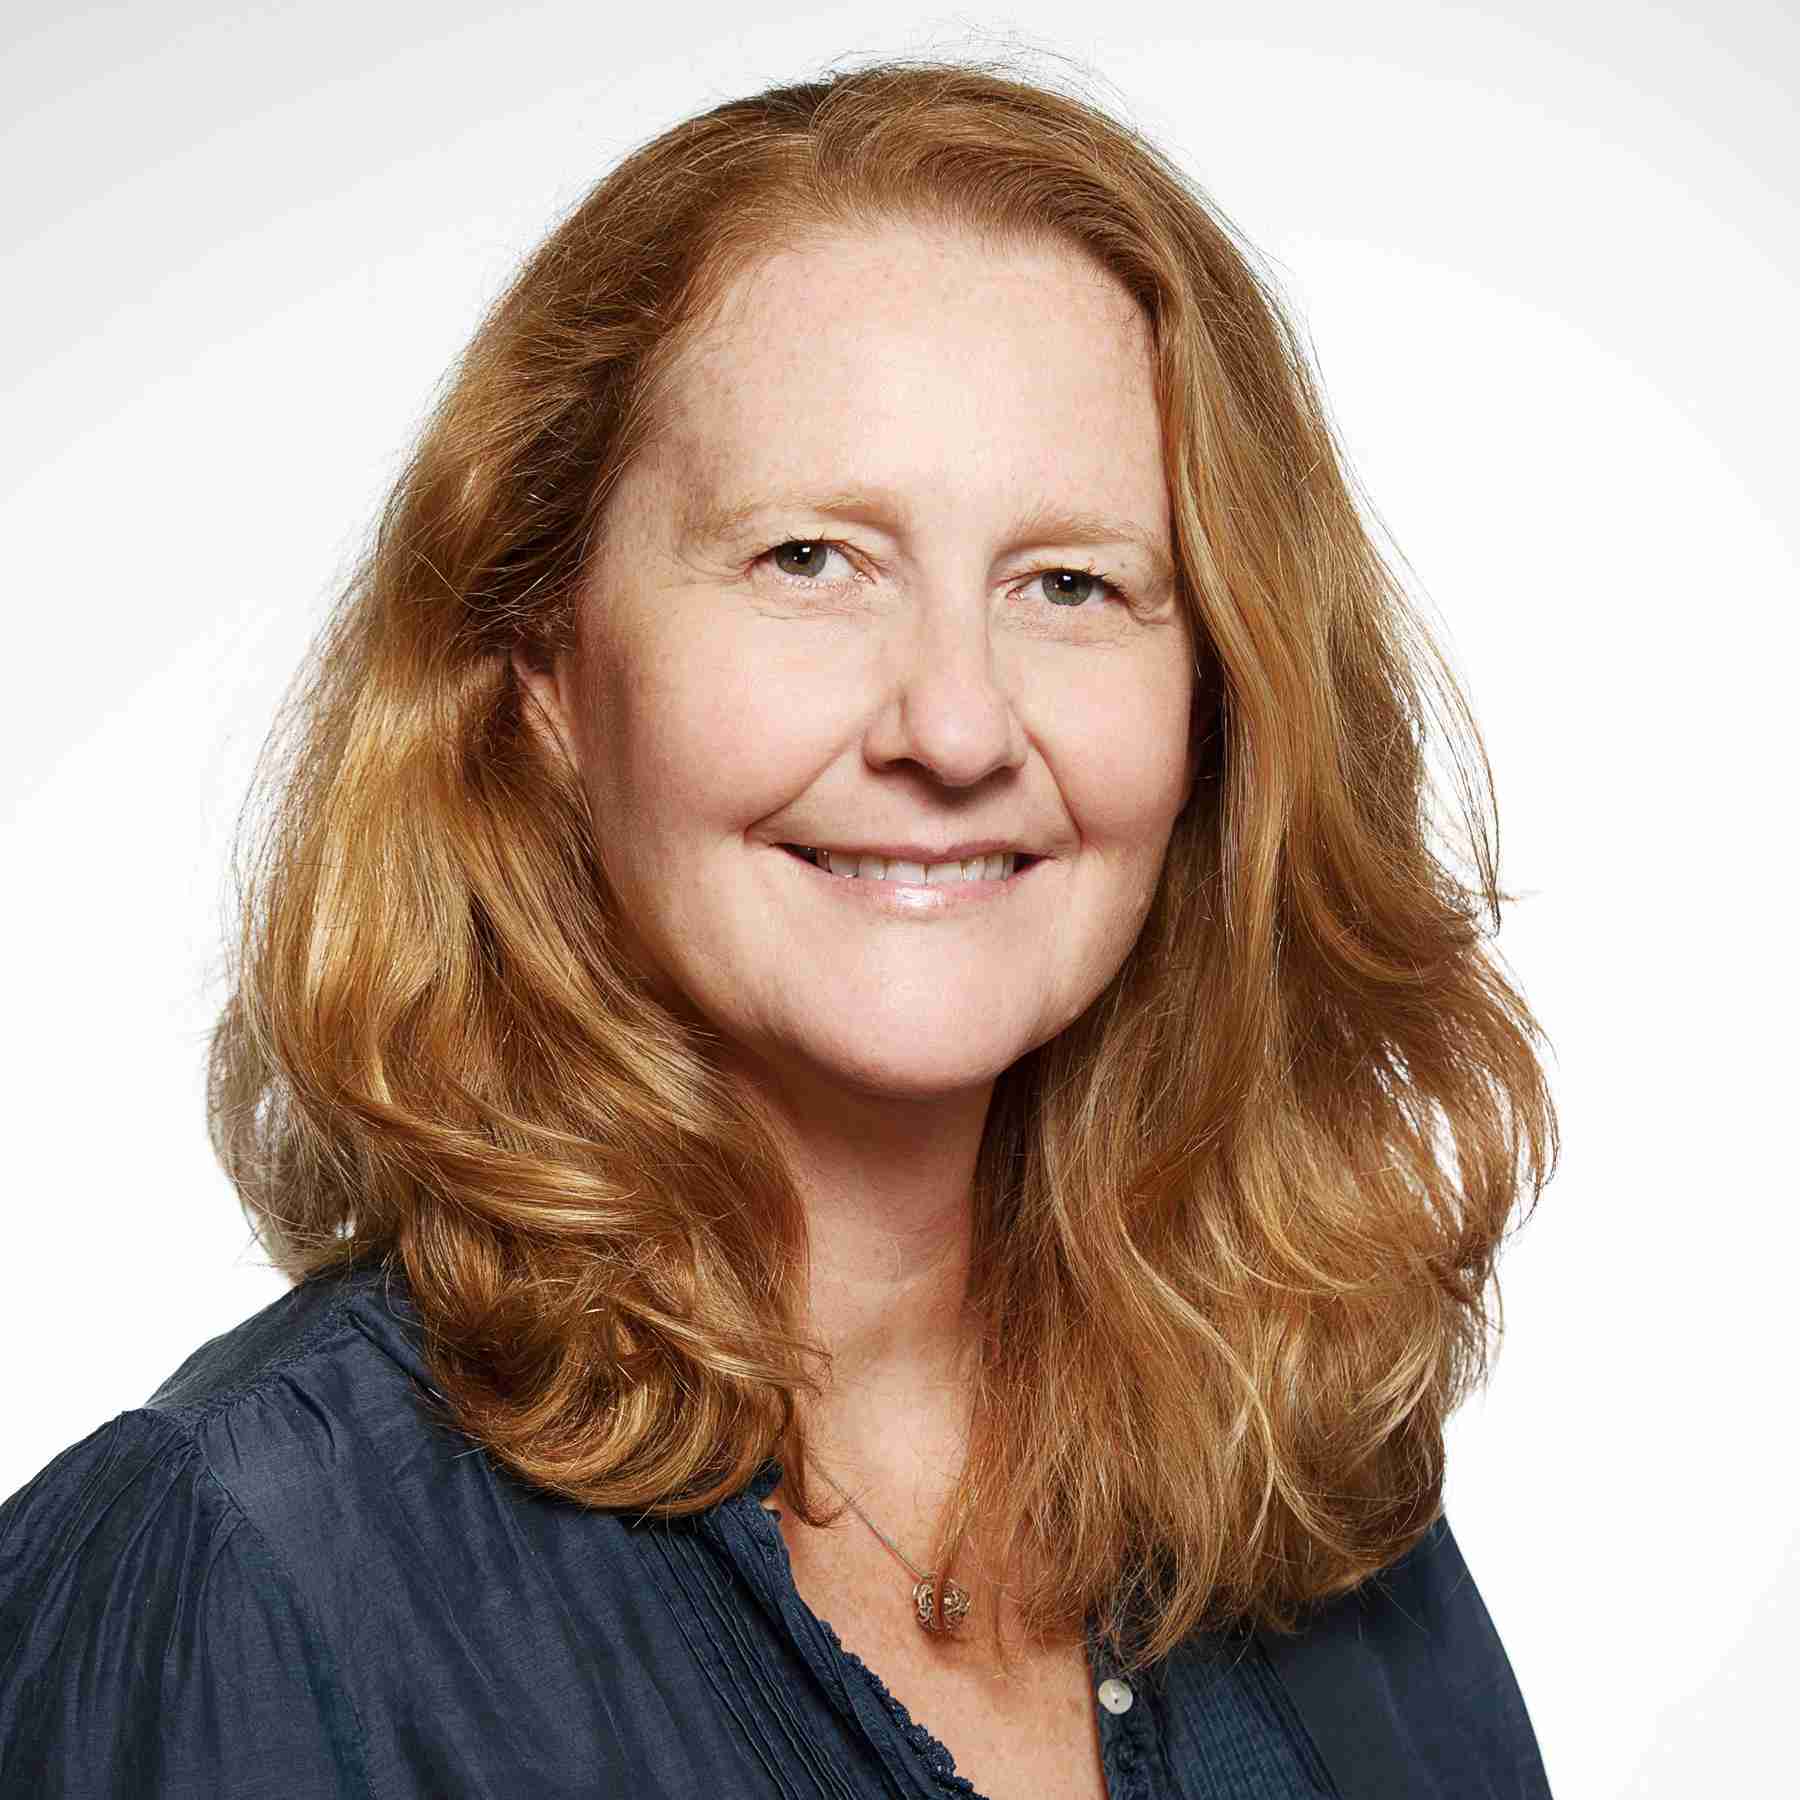 Profile image of Prof Jane McAdam